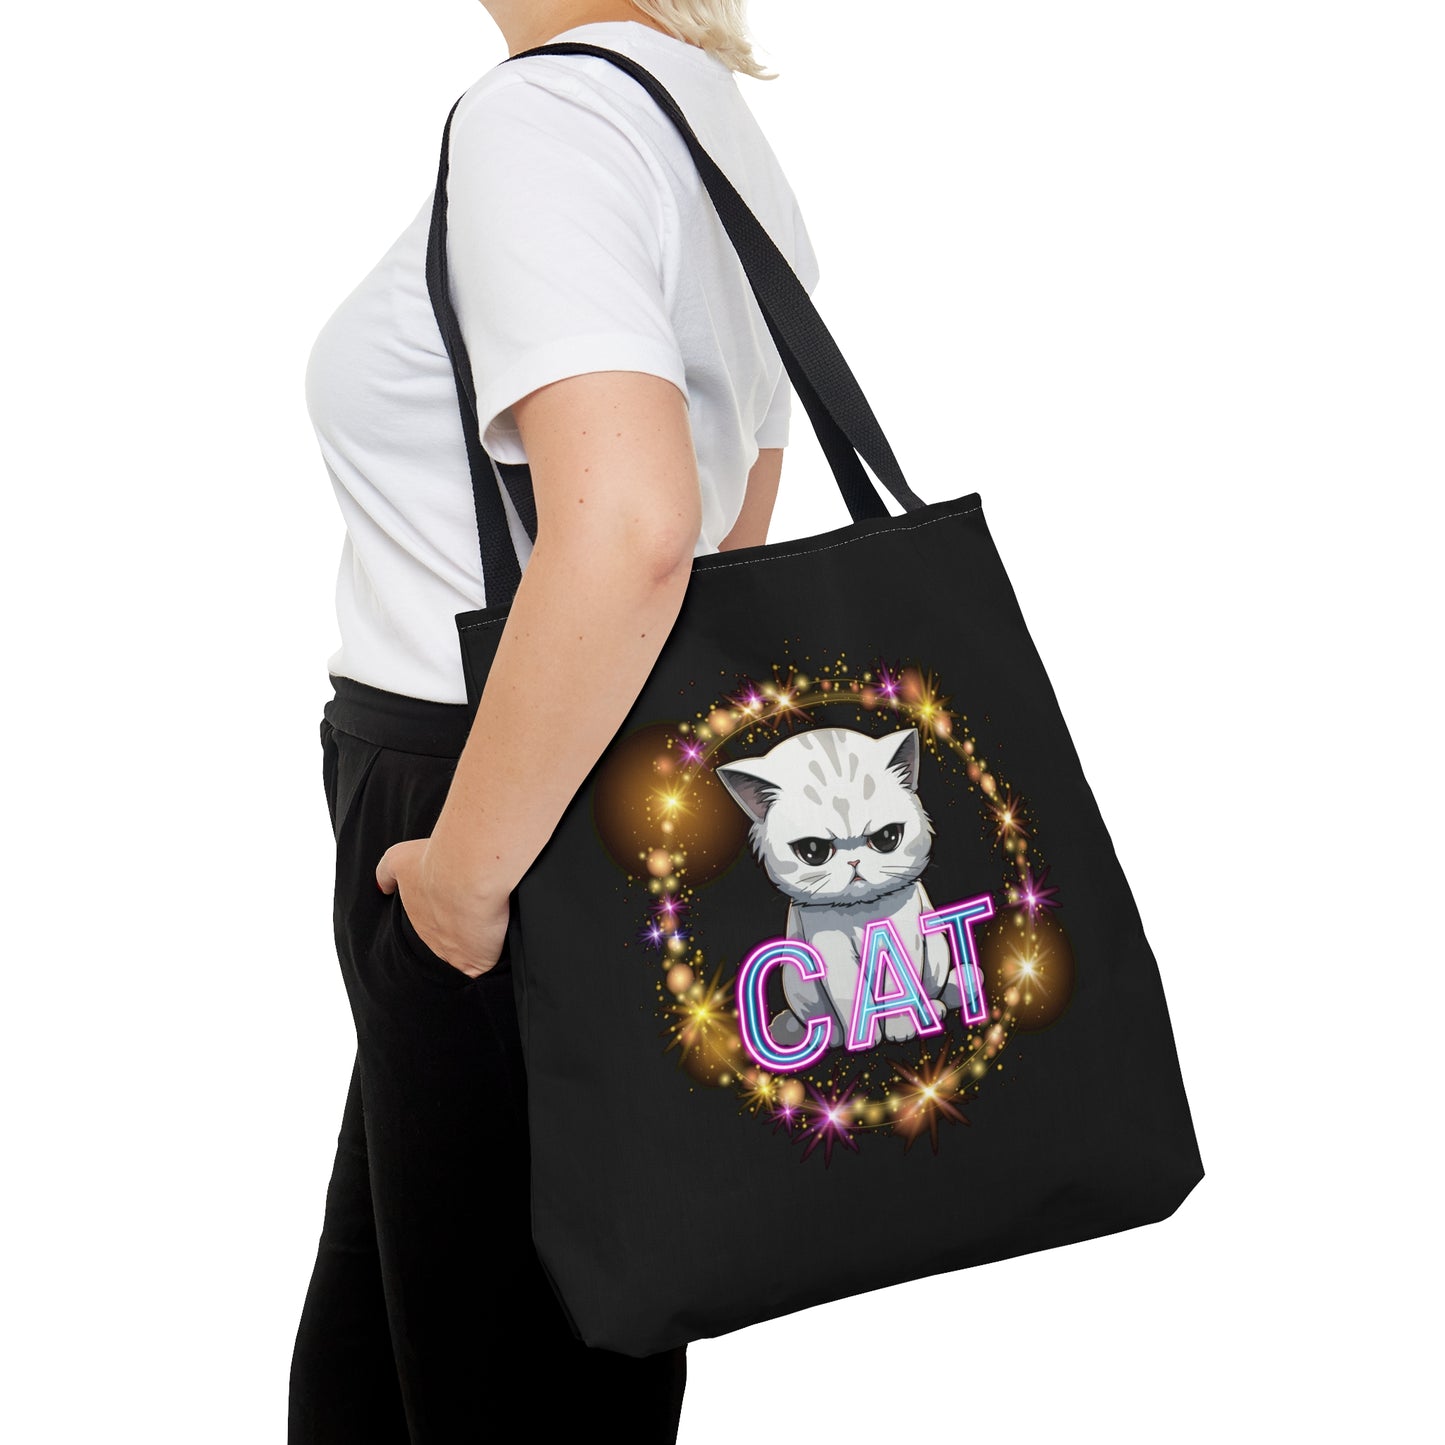 CAT Colorful logo with Cute Cat Design Tote Bag (AOP)